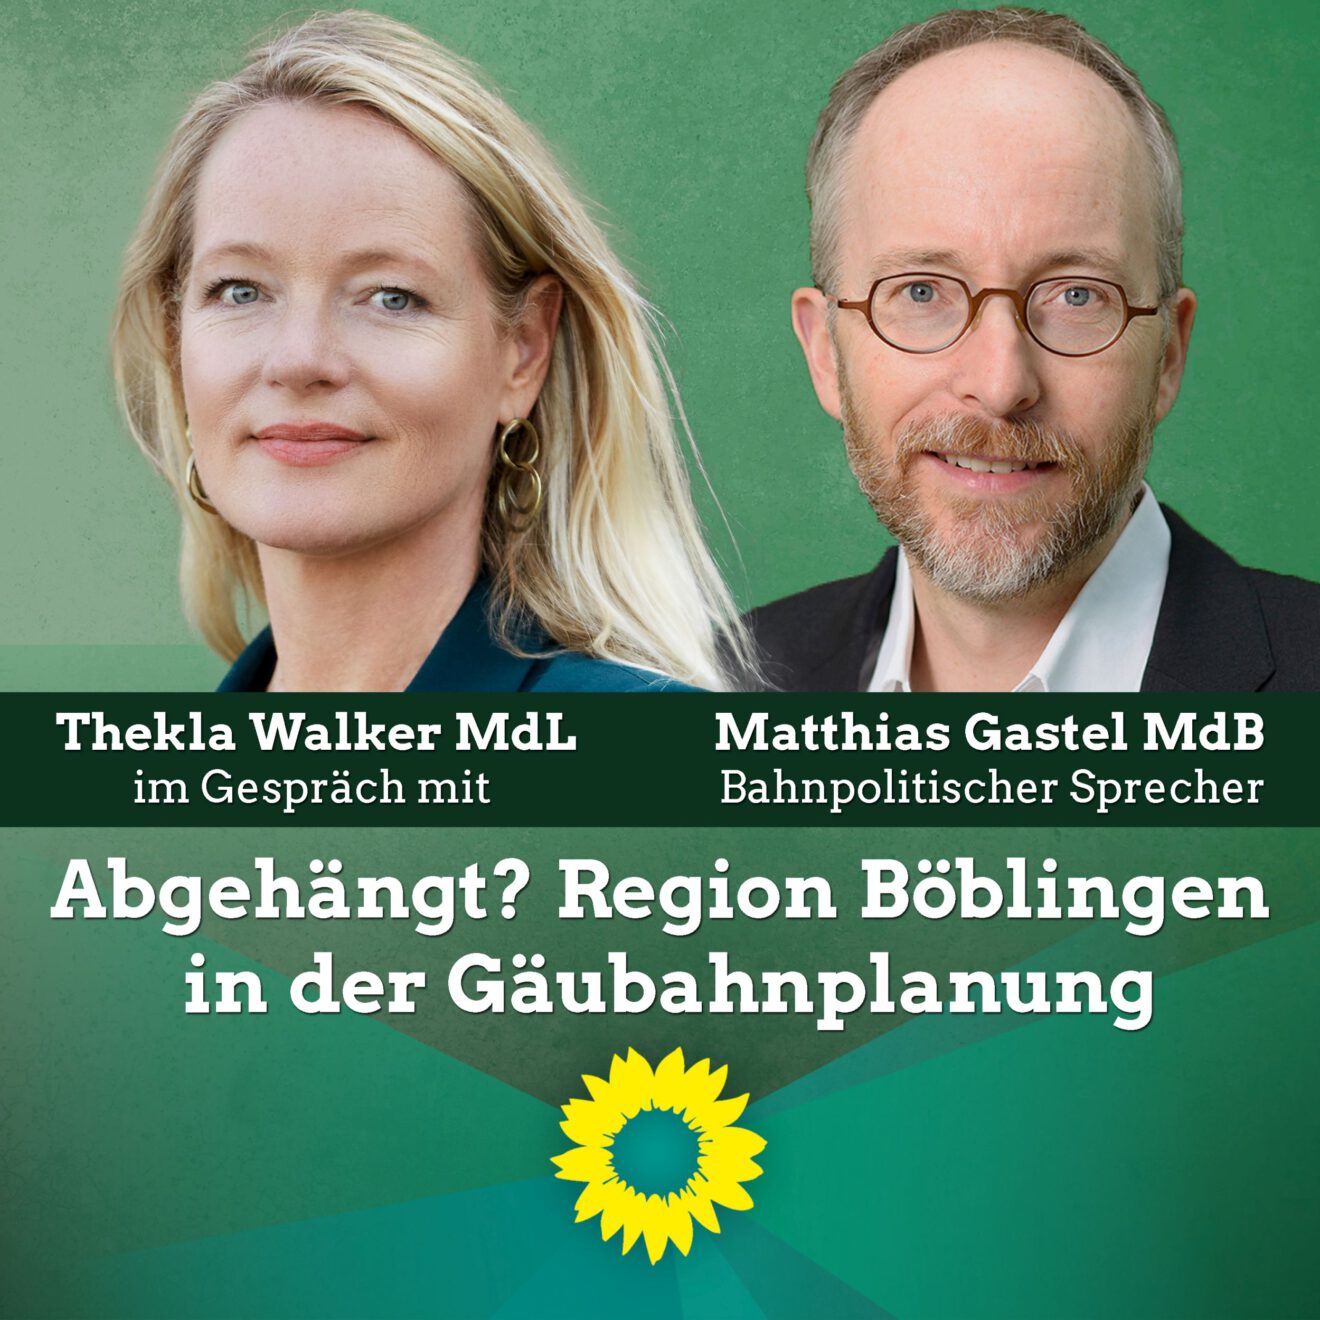 Abgehängt? Region Böblingen in der Gäubahnplanung – mit Matthias Gastel MdB